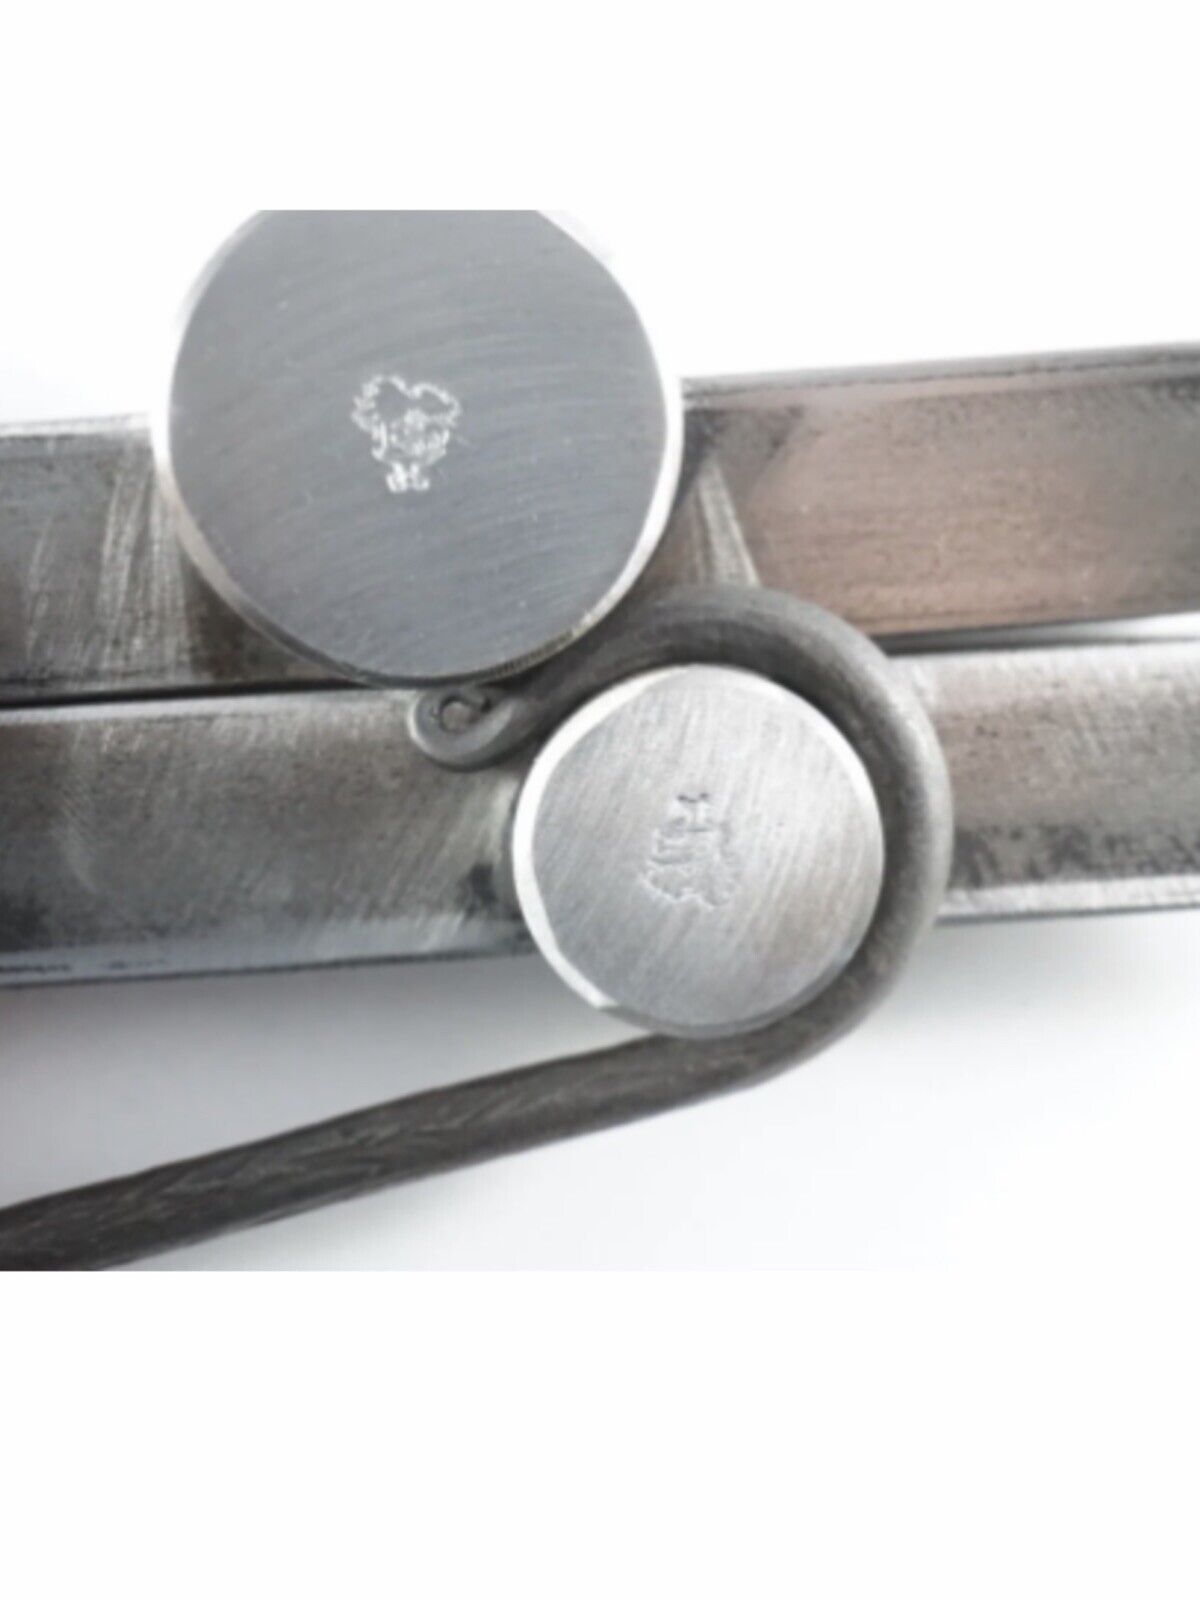 Tool Bending Jig/Forms S And J Hooks Vice Tool Blacksmith Handmade In USA